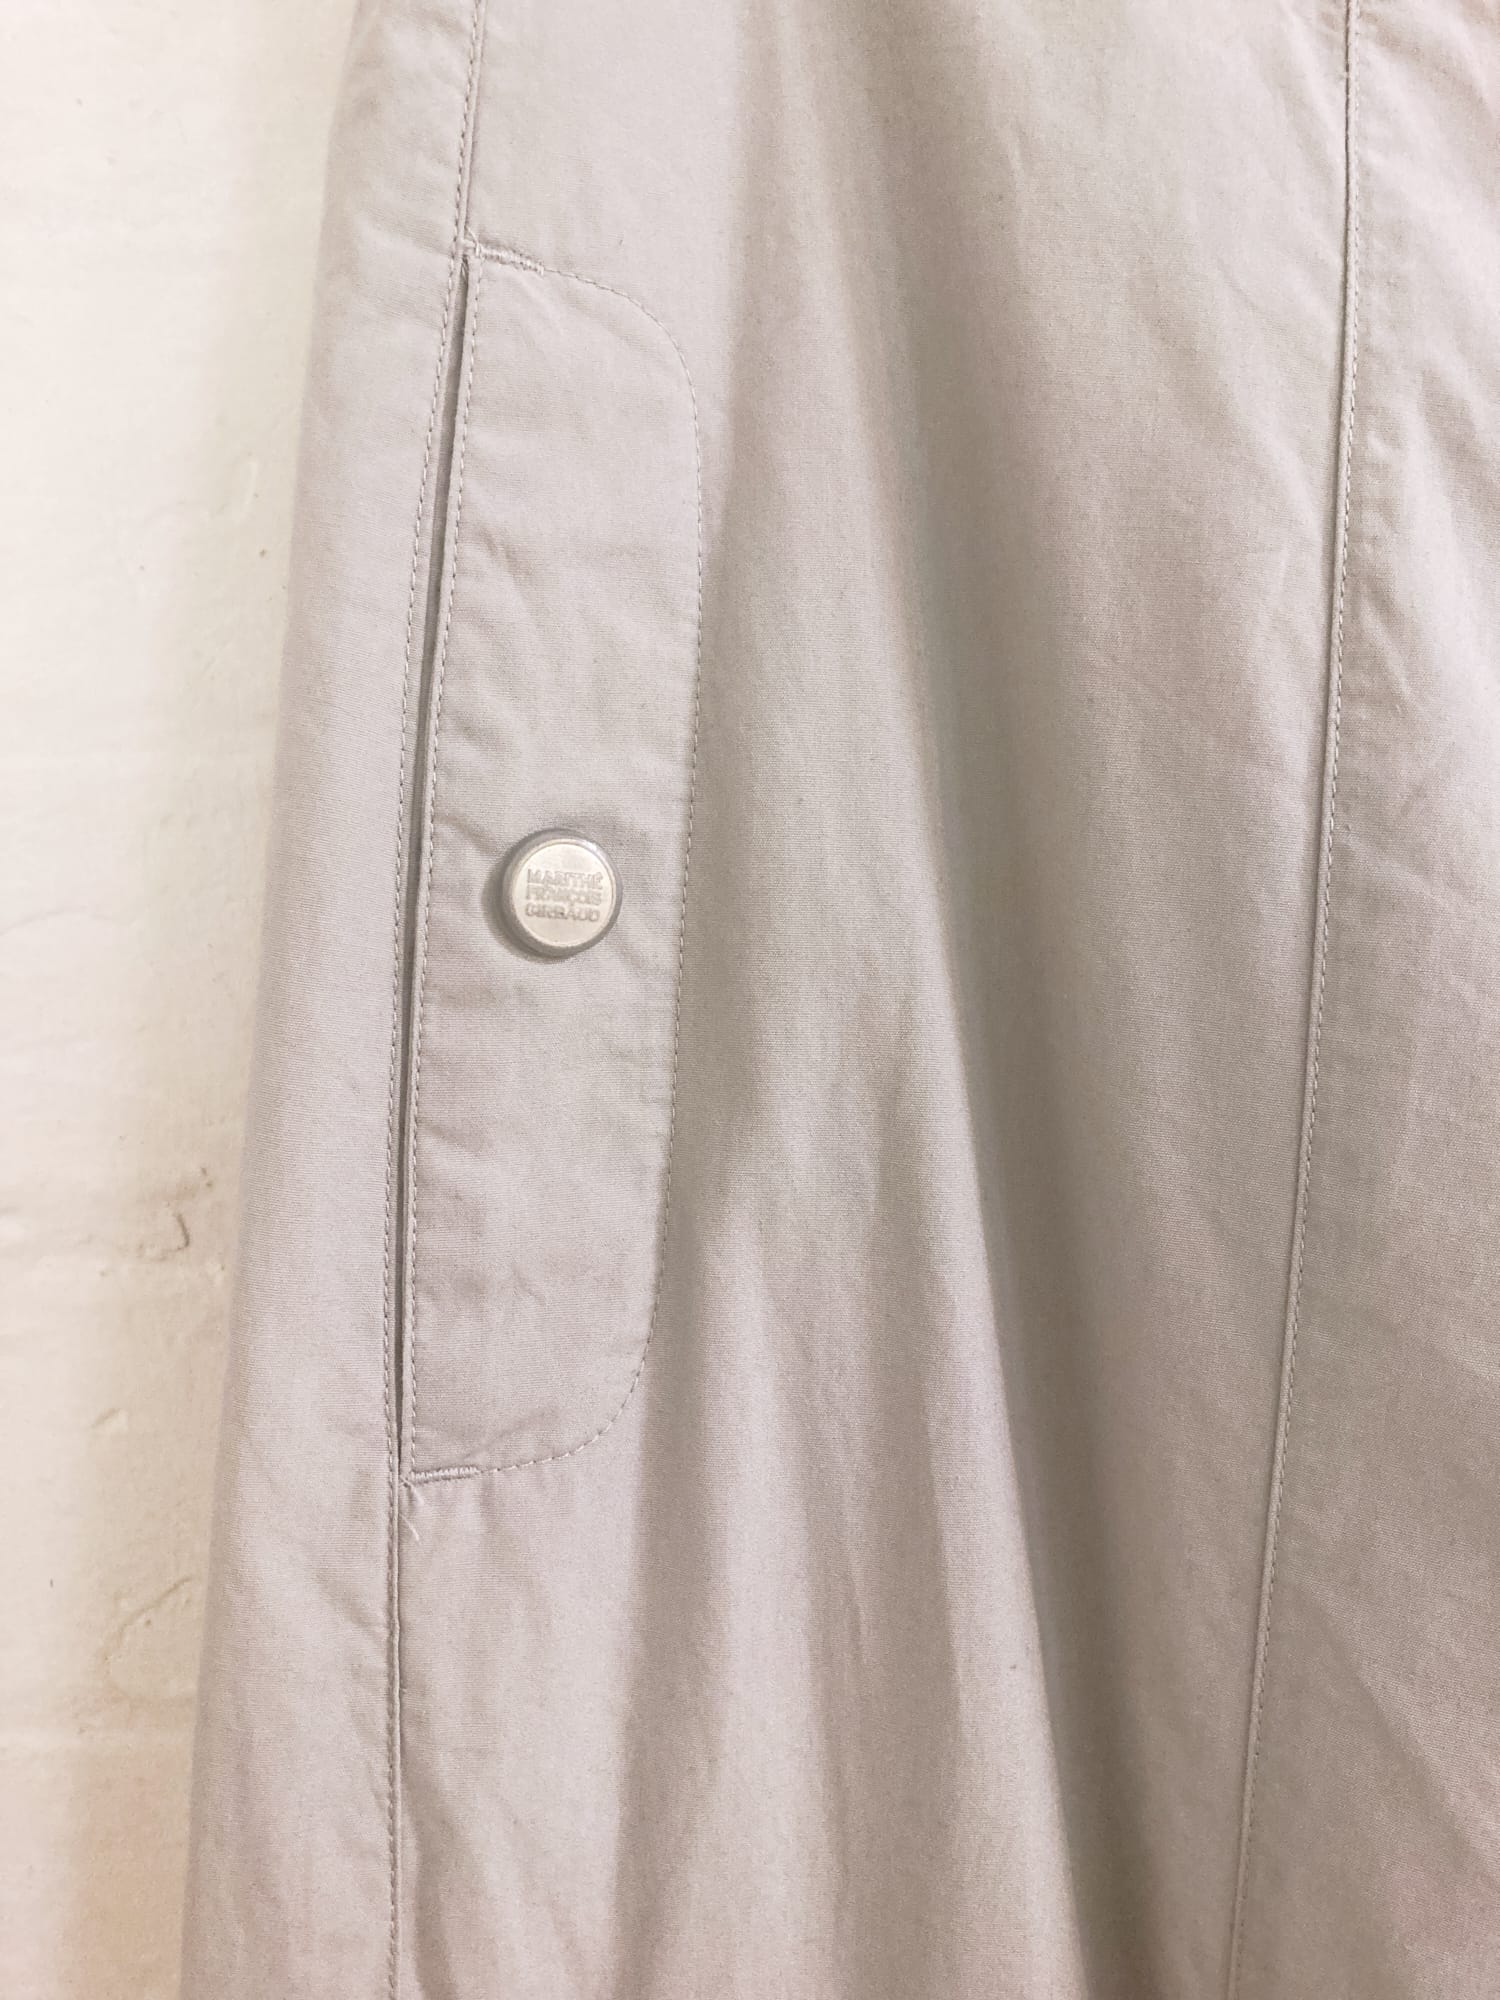 Marithe Francois Girbaud light grey cotton cargo pants - size 32